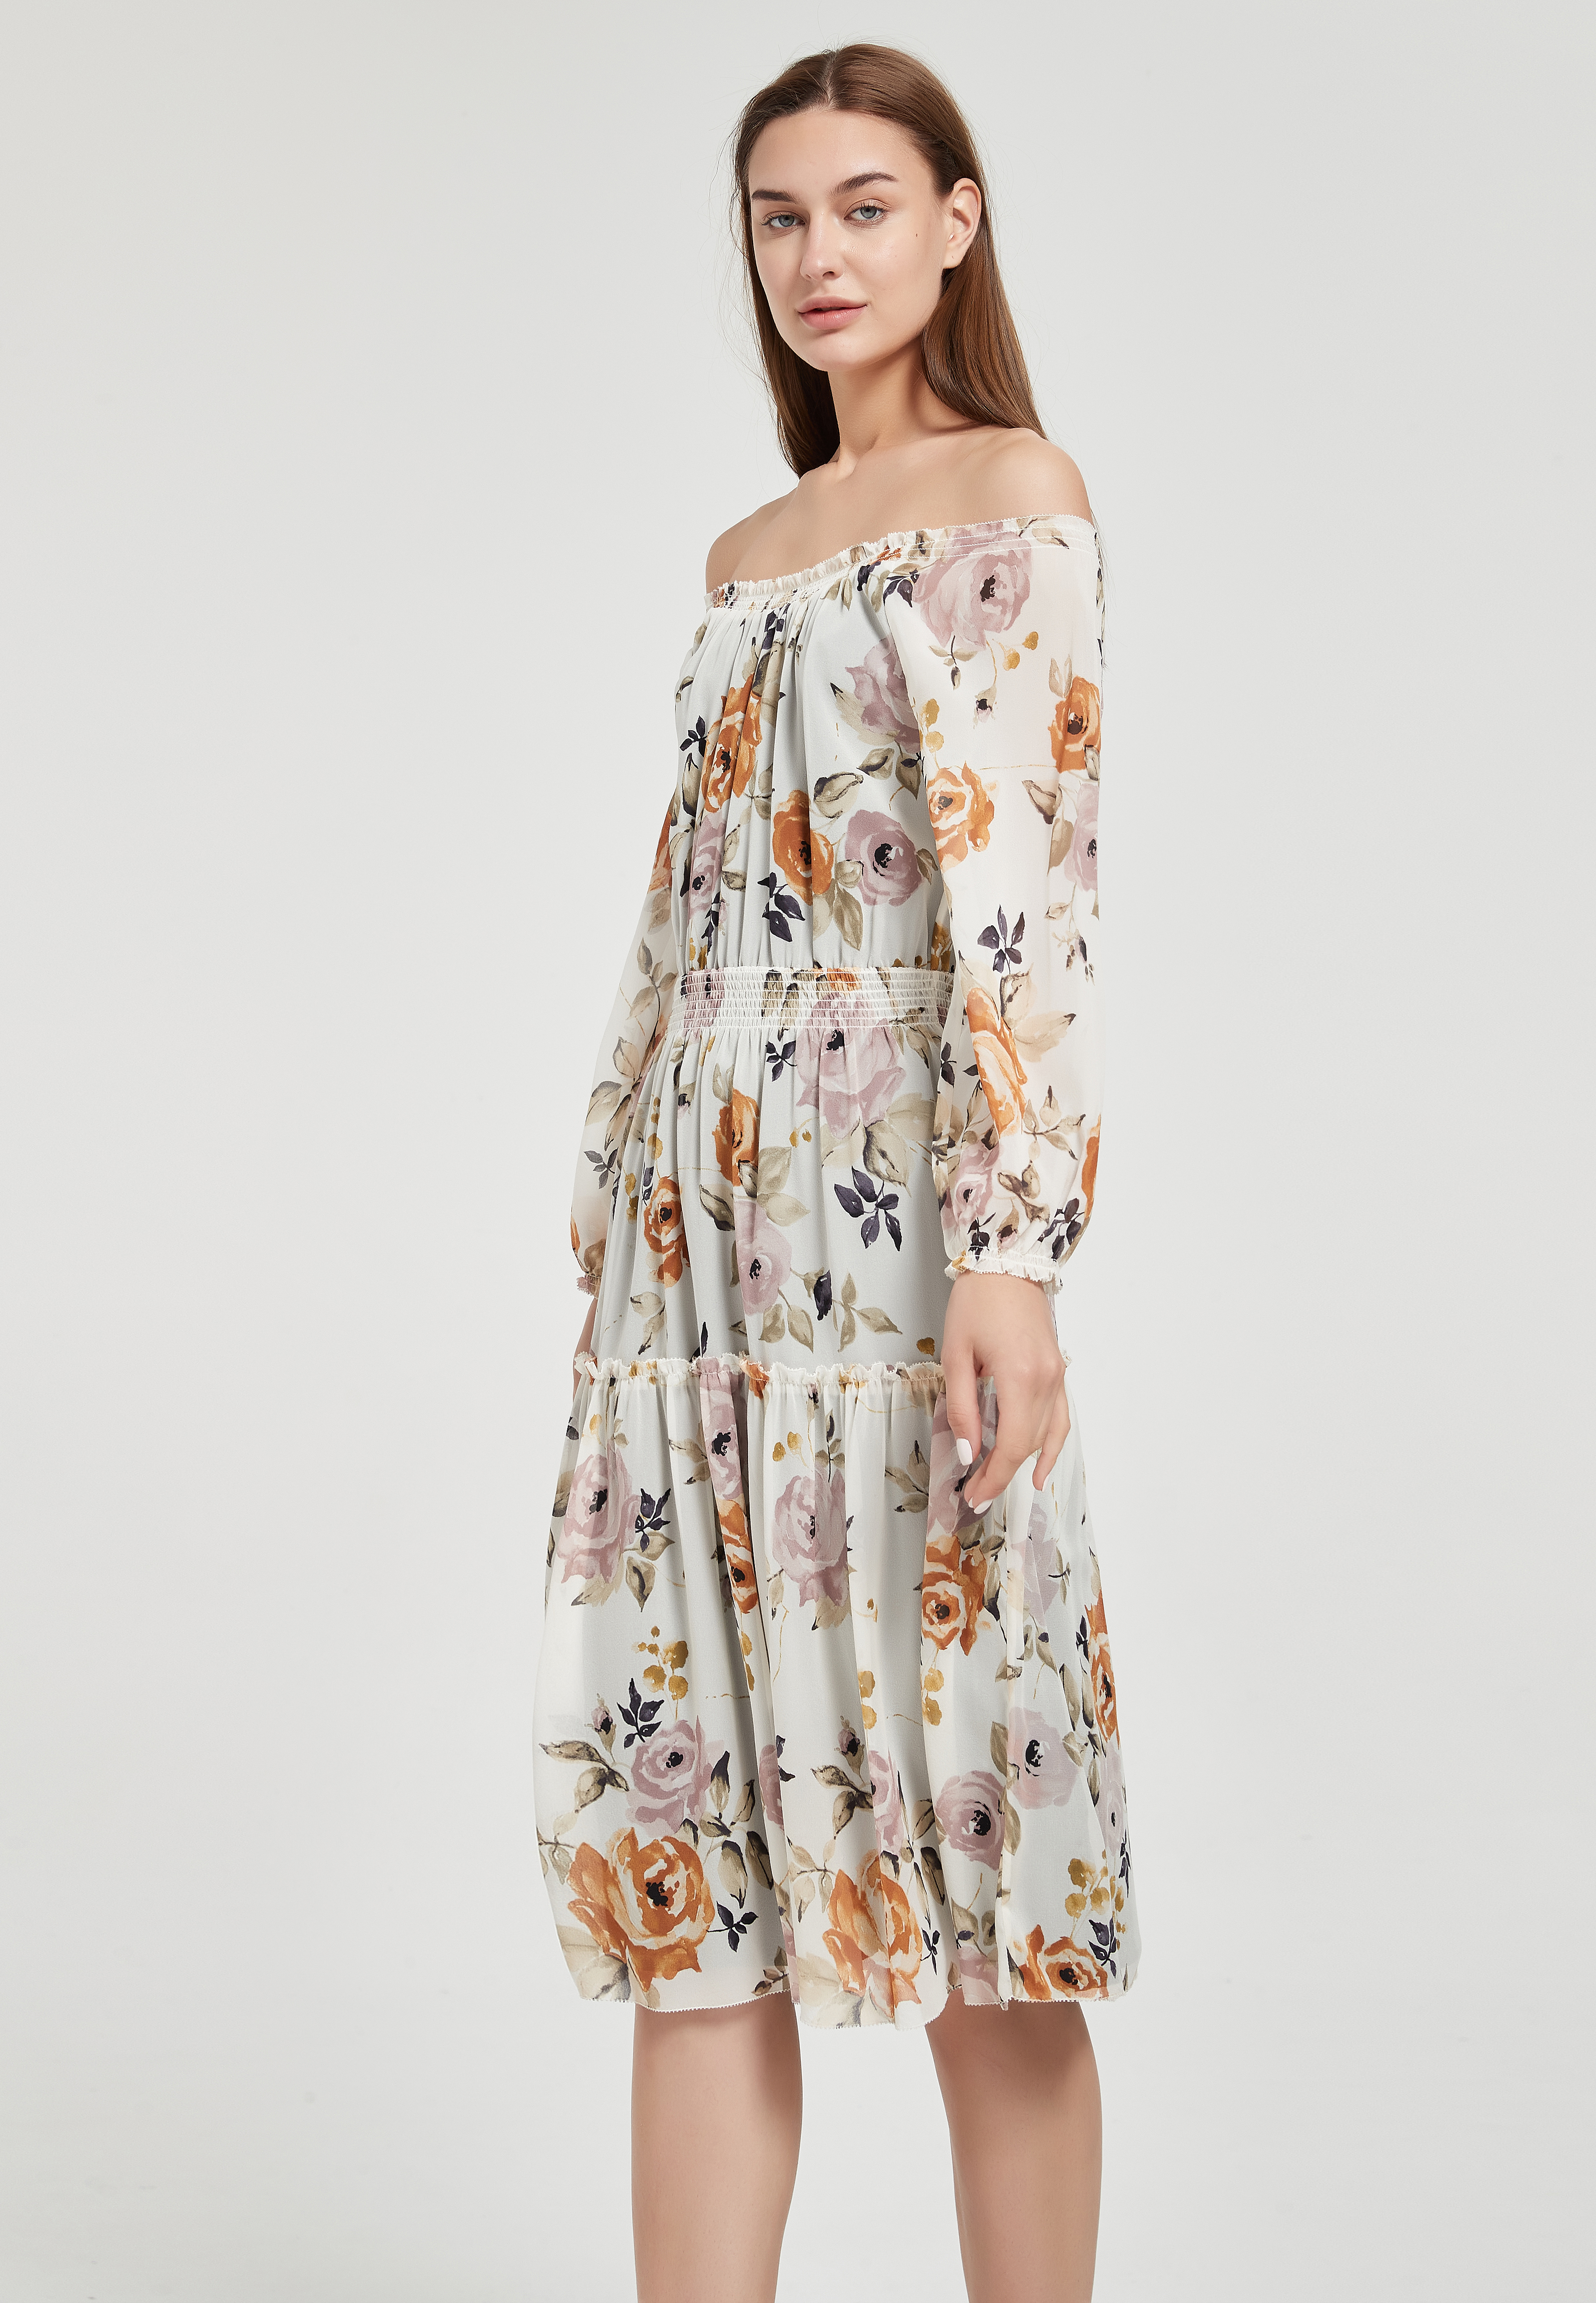 Women’s Fashion One-Shoulder Halter Print Dress